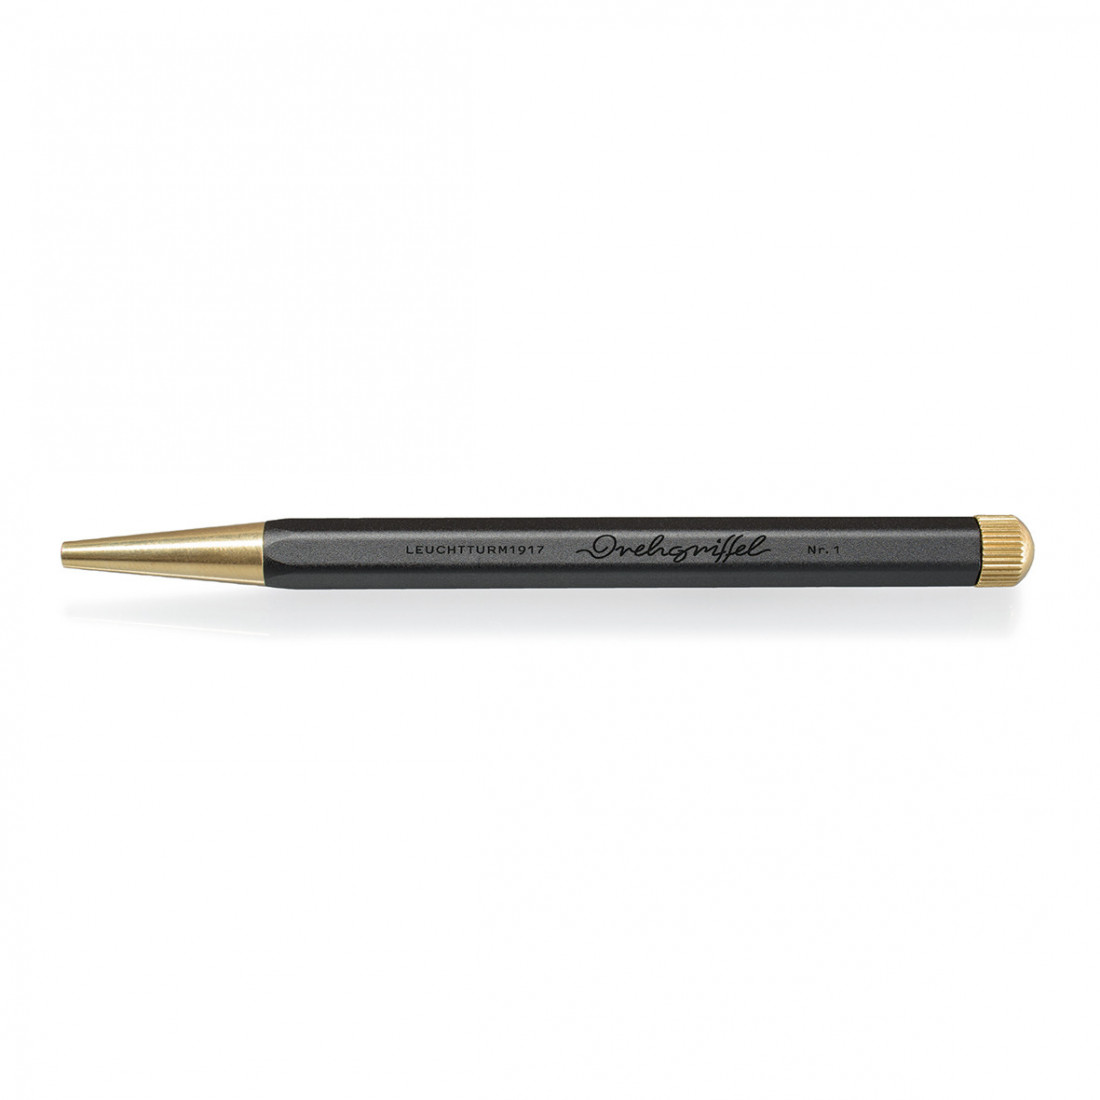 Drehgriffel Nr. 1, Black - Gel pen with black ink - Bullet Journal Edition  - LEUCHTTURM1917